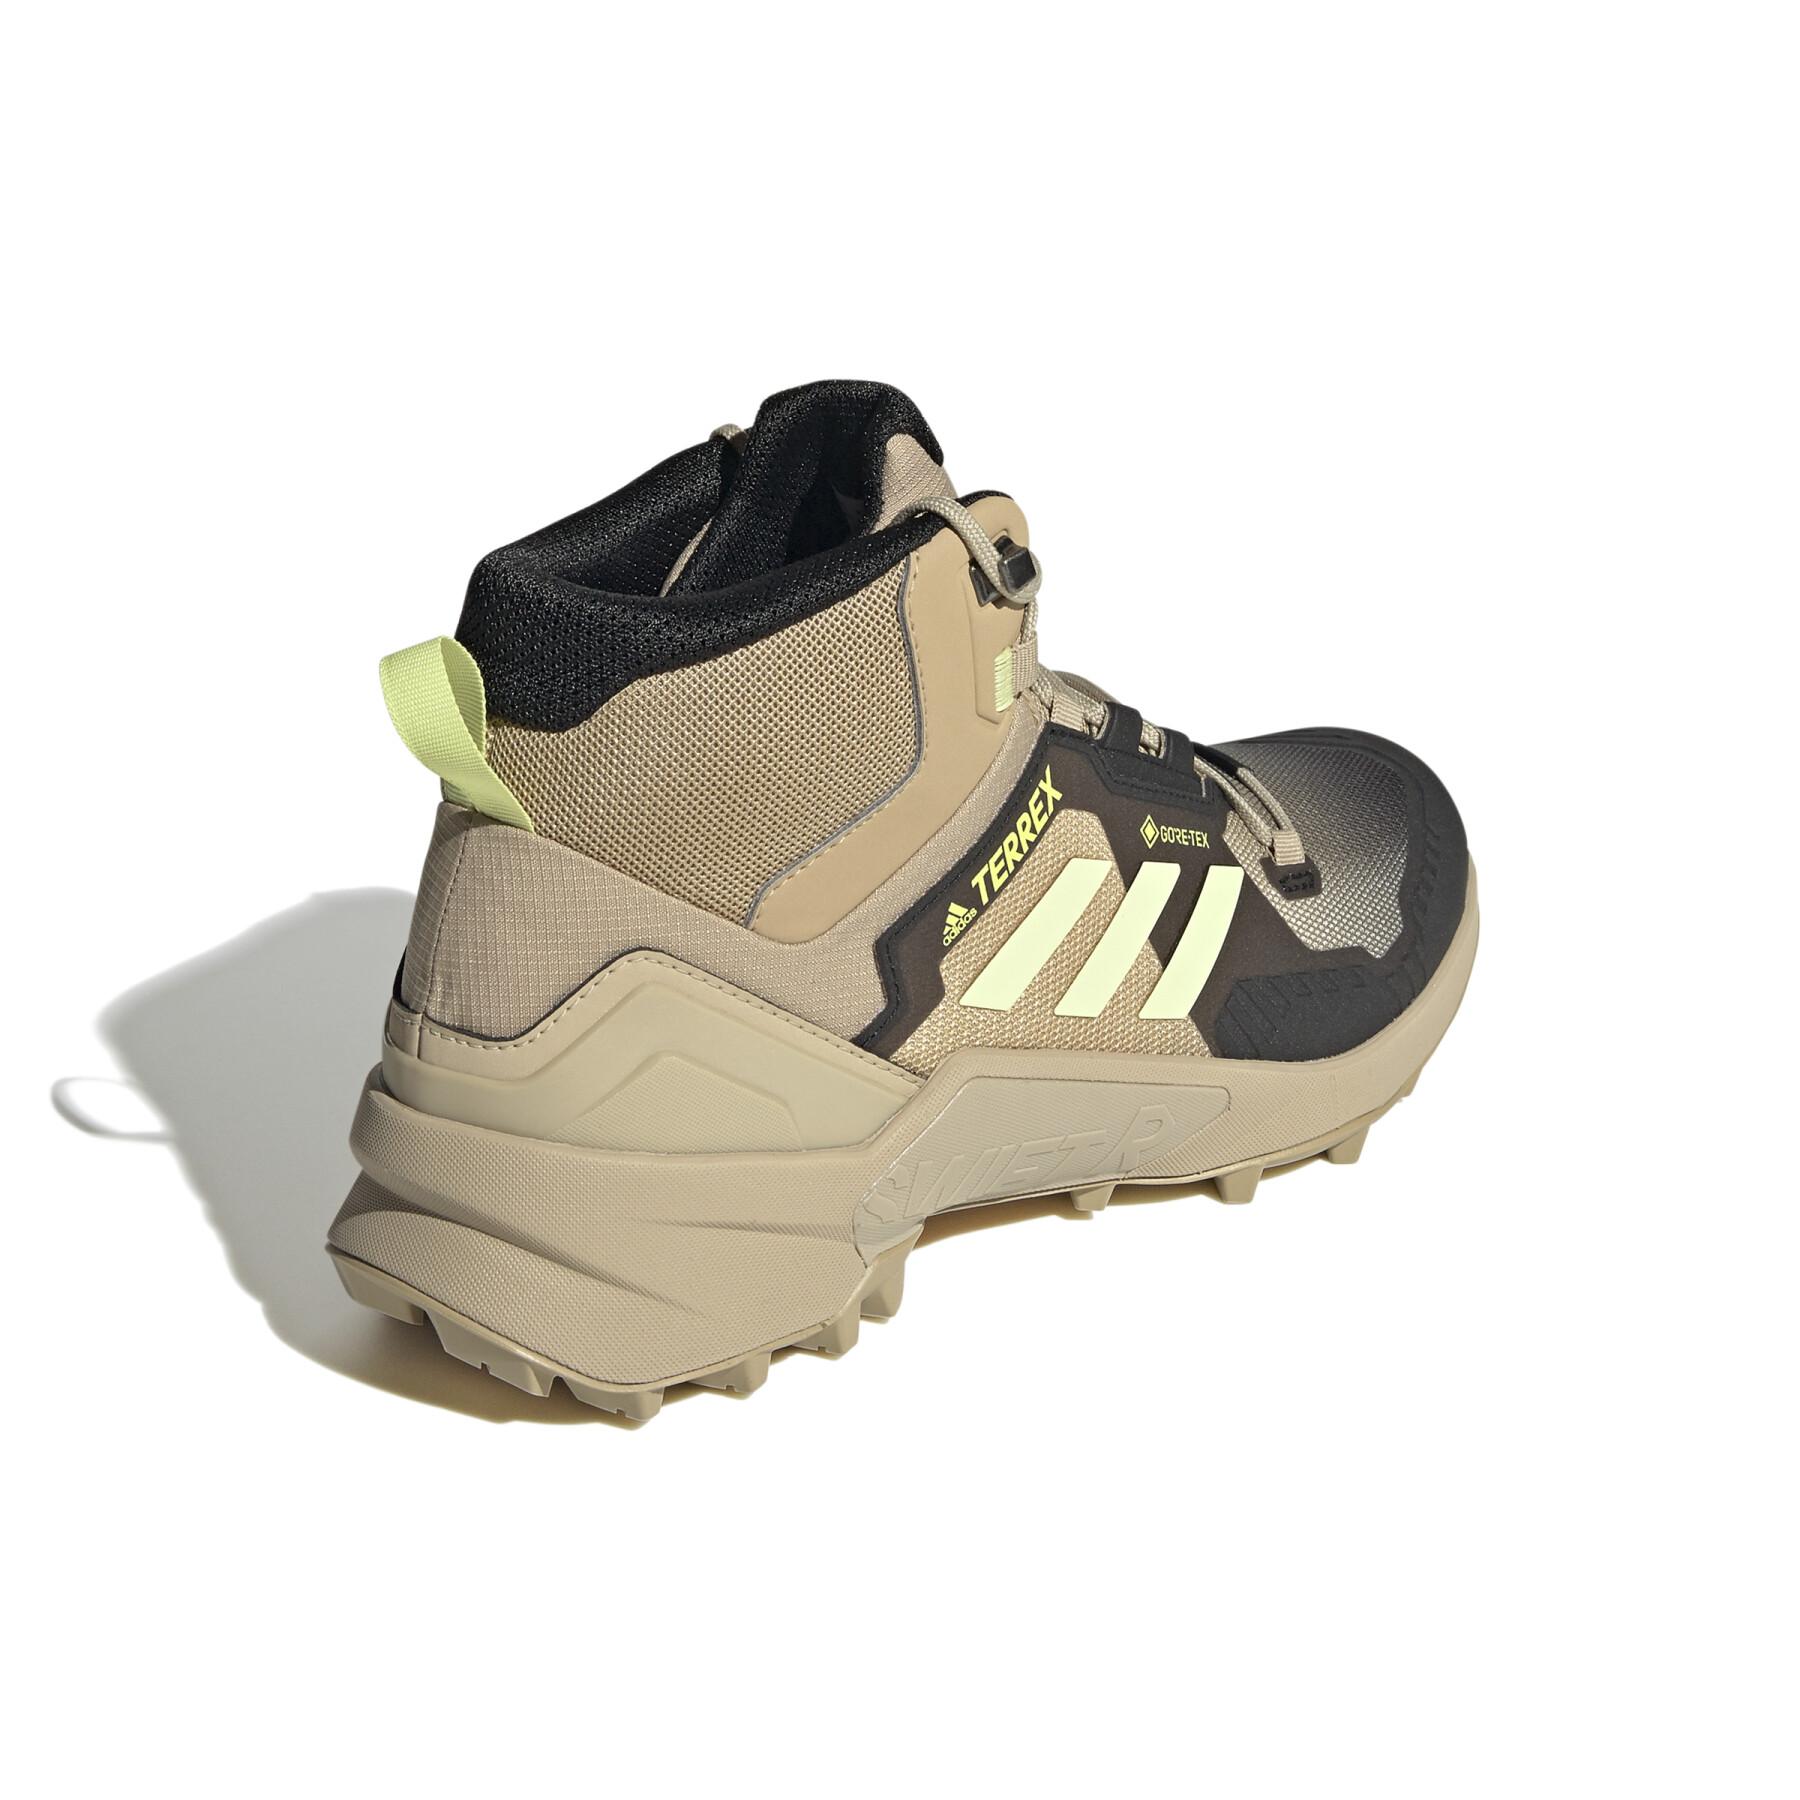 Hiking shoes adidas Terrex Swift R3 Mid Gore-Tex